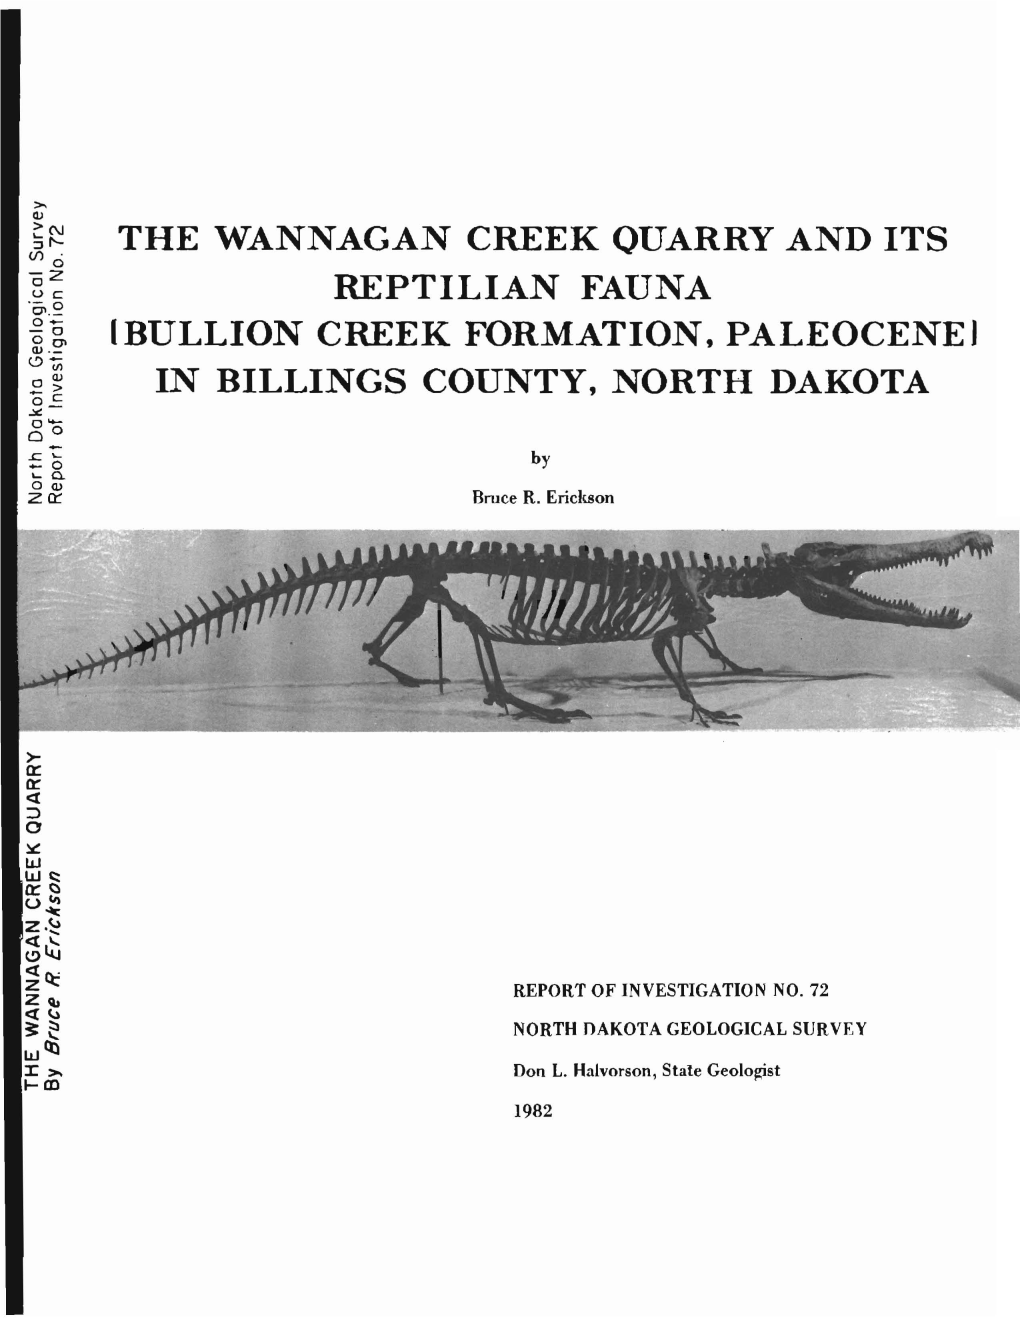 The Wannagan Creek Quarry and Its Reptilian Fauna